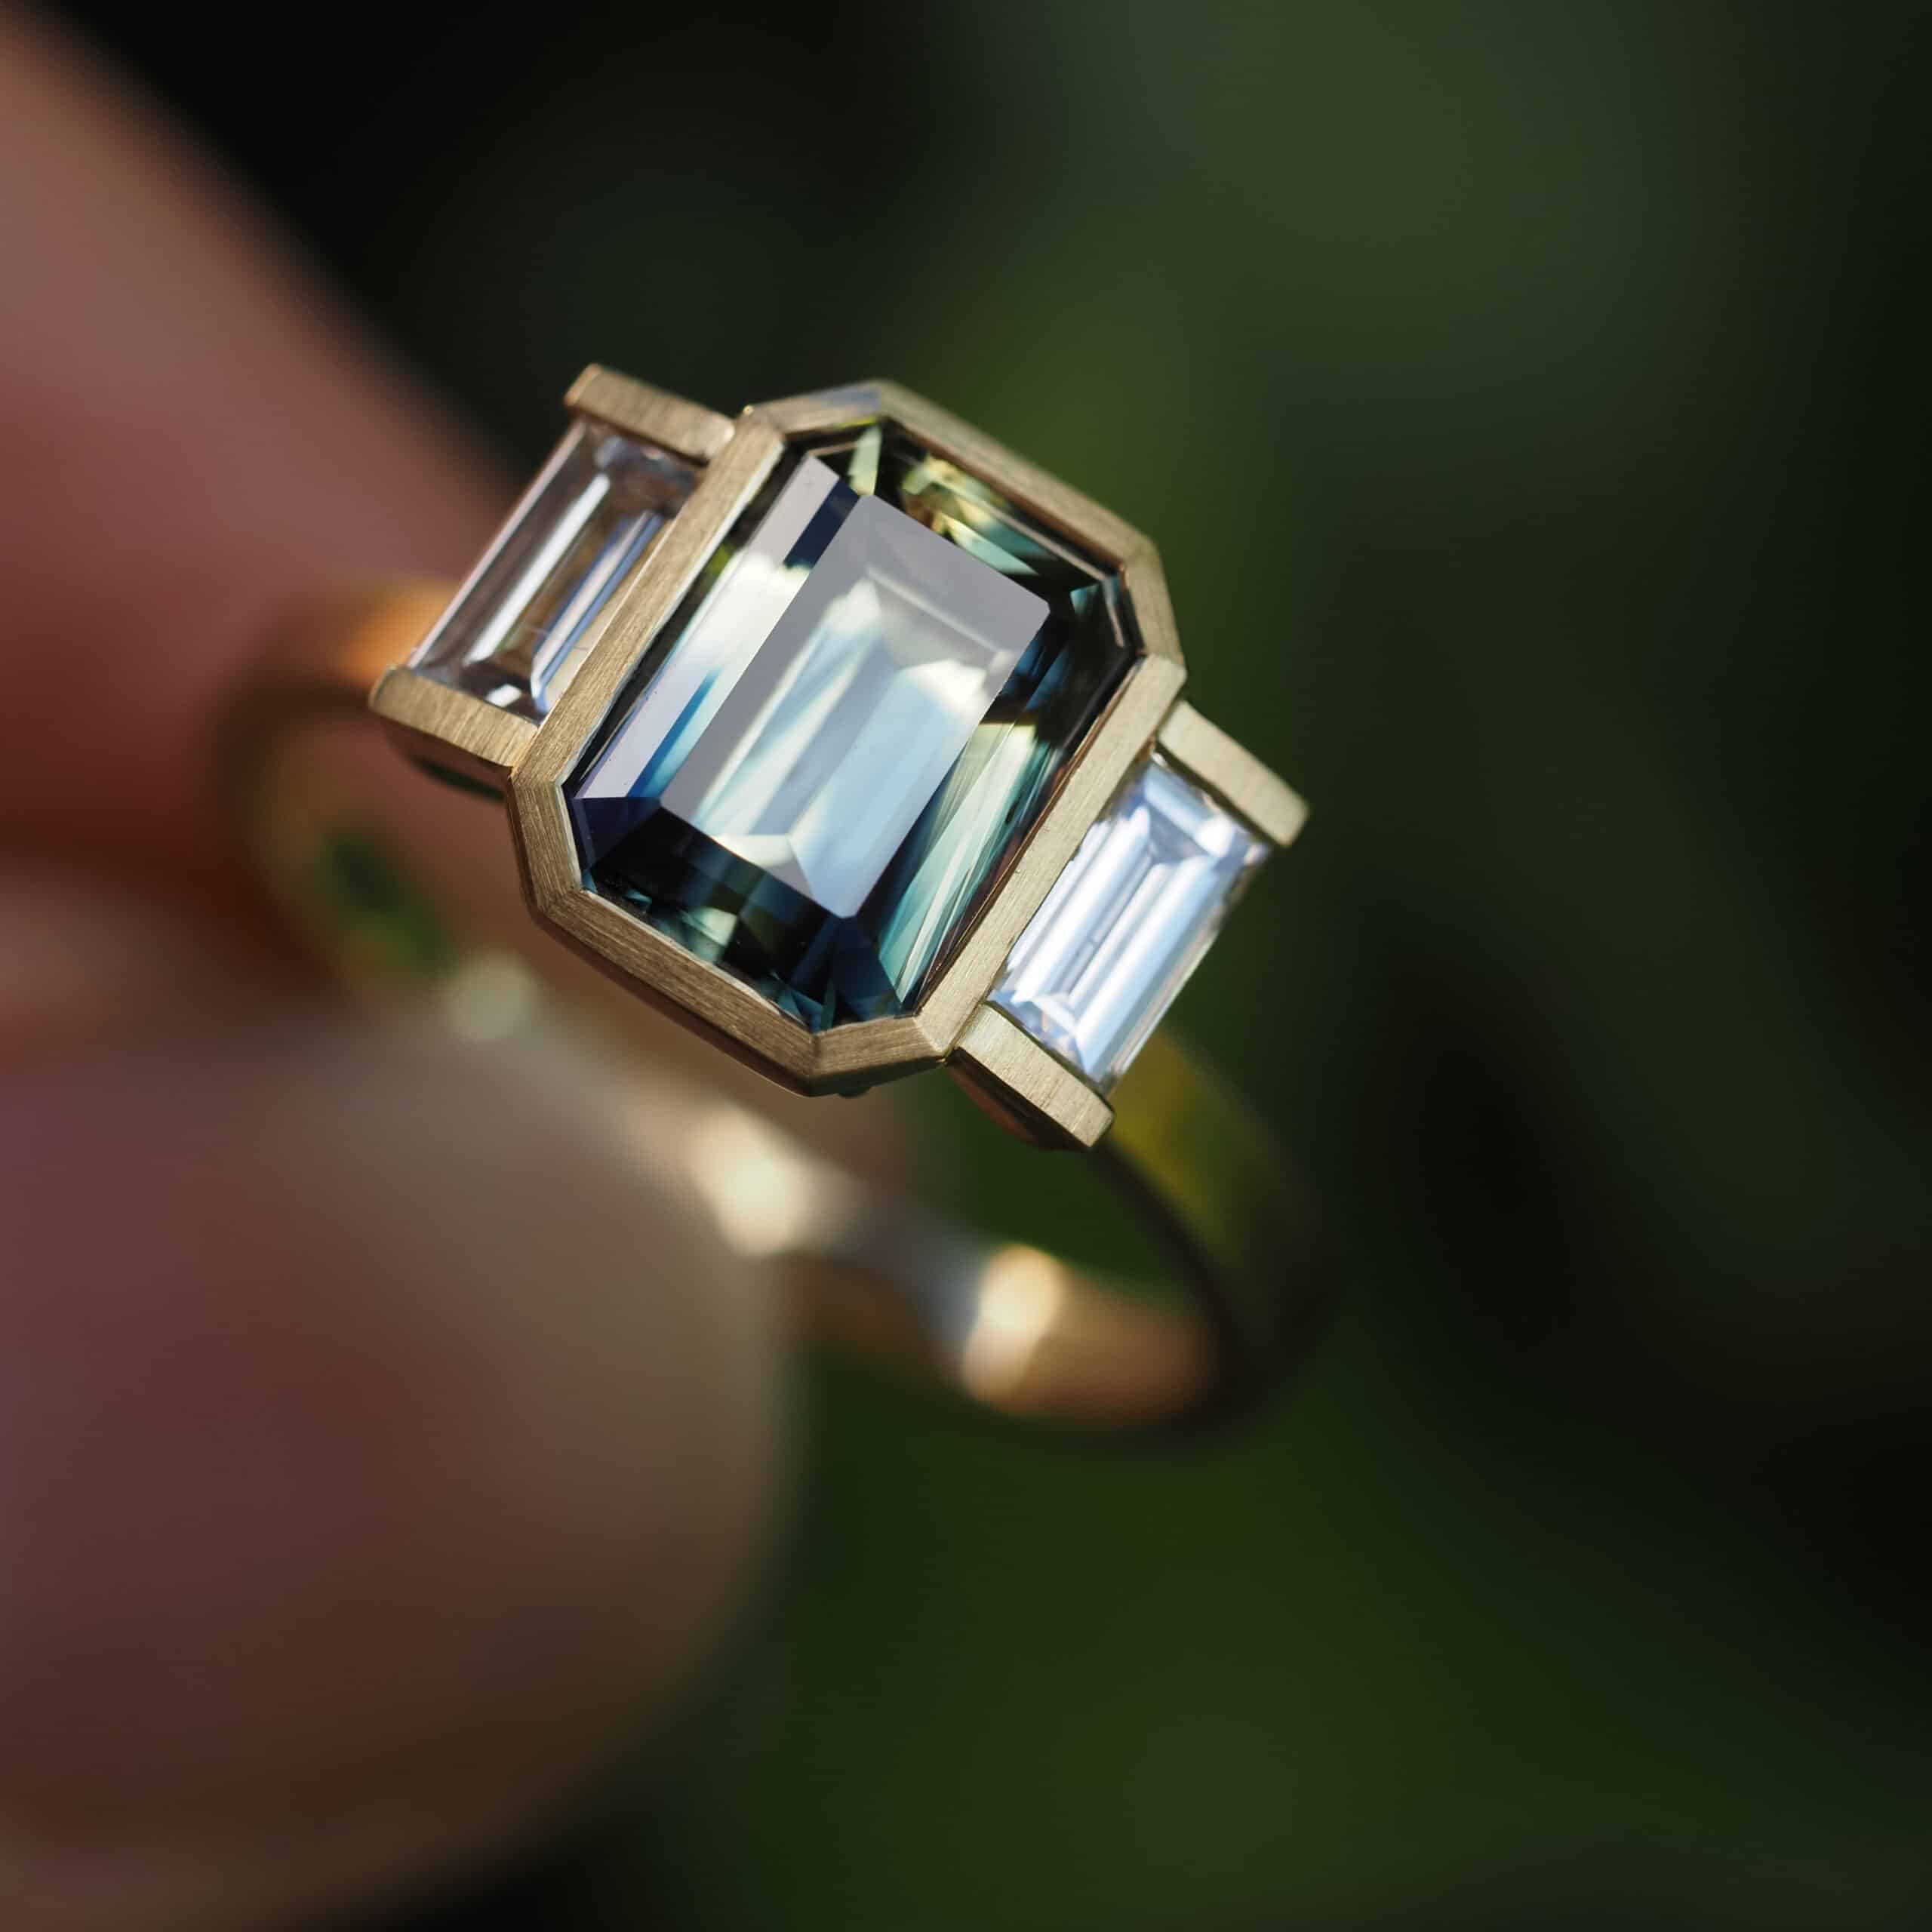 Art Dec engagement ring with emerald cut Australian parti sapphire and baguette diamonds